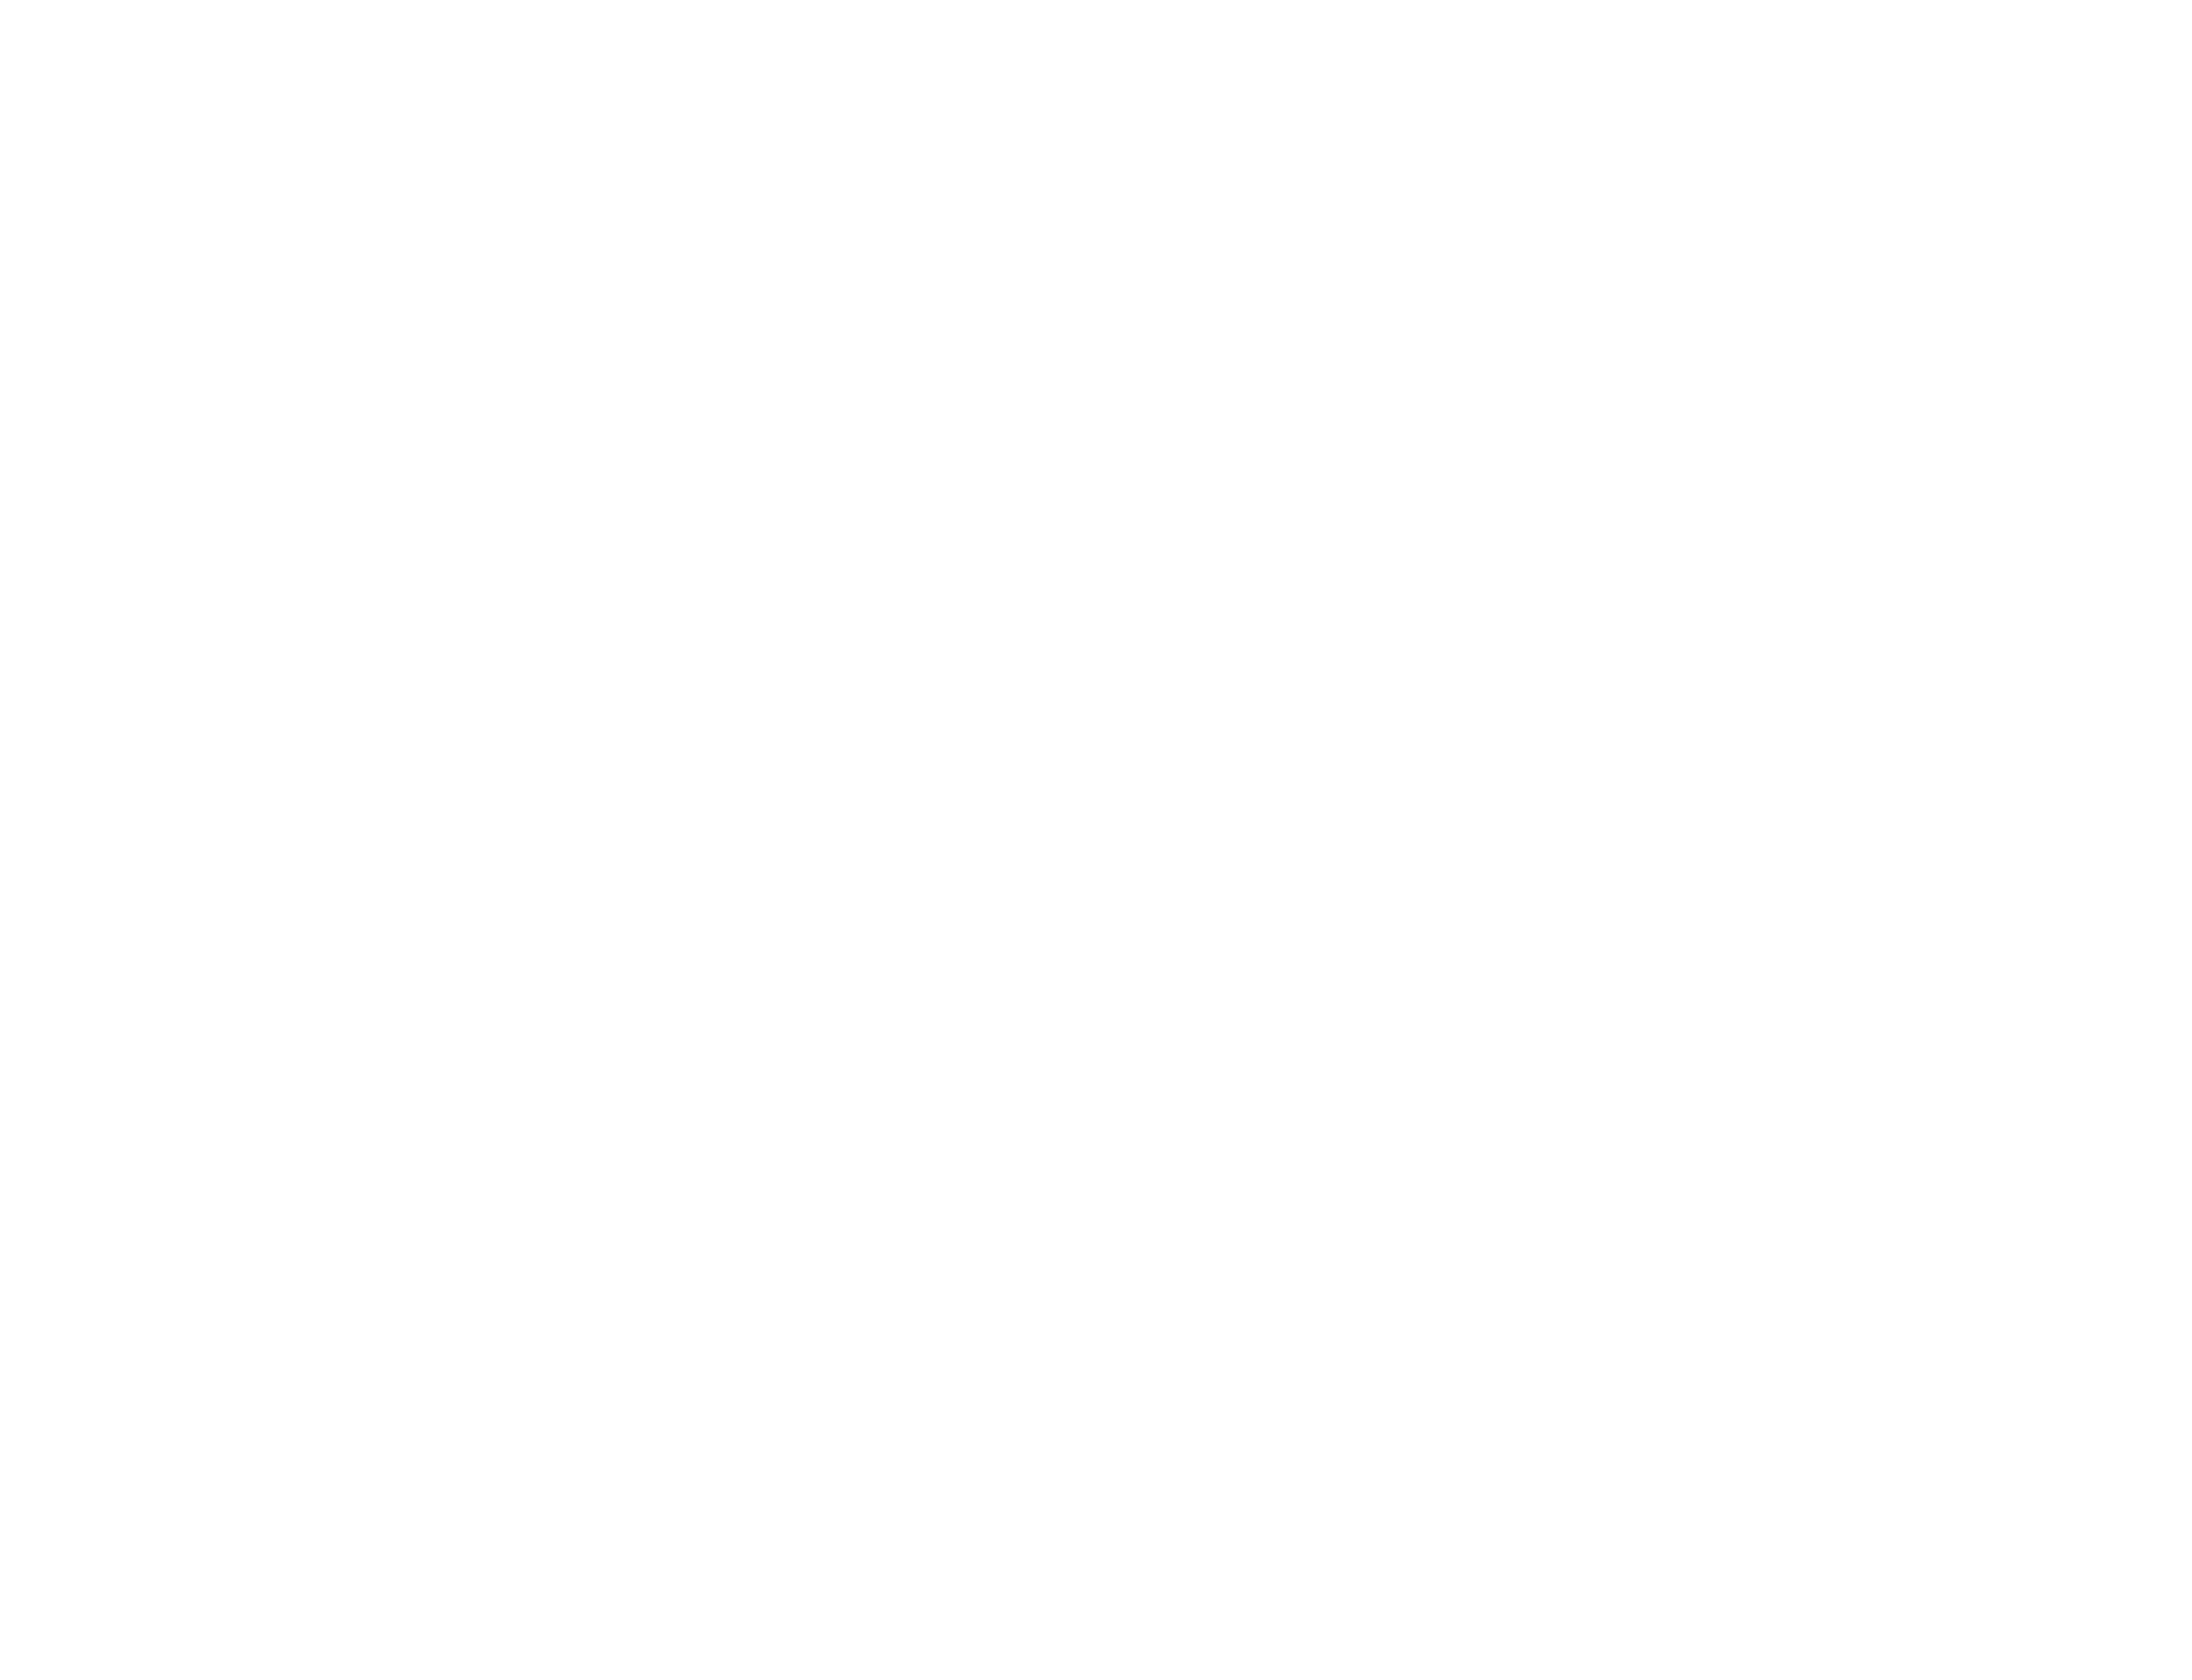 Logo Cevalo interviert